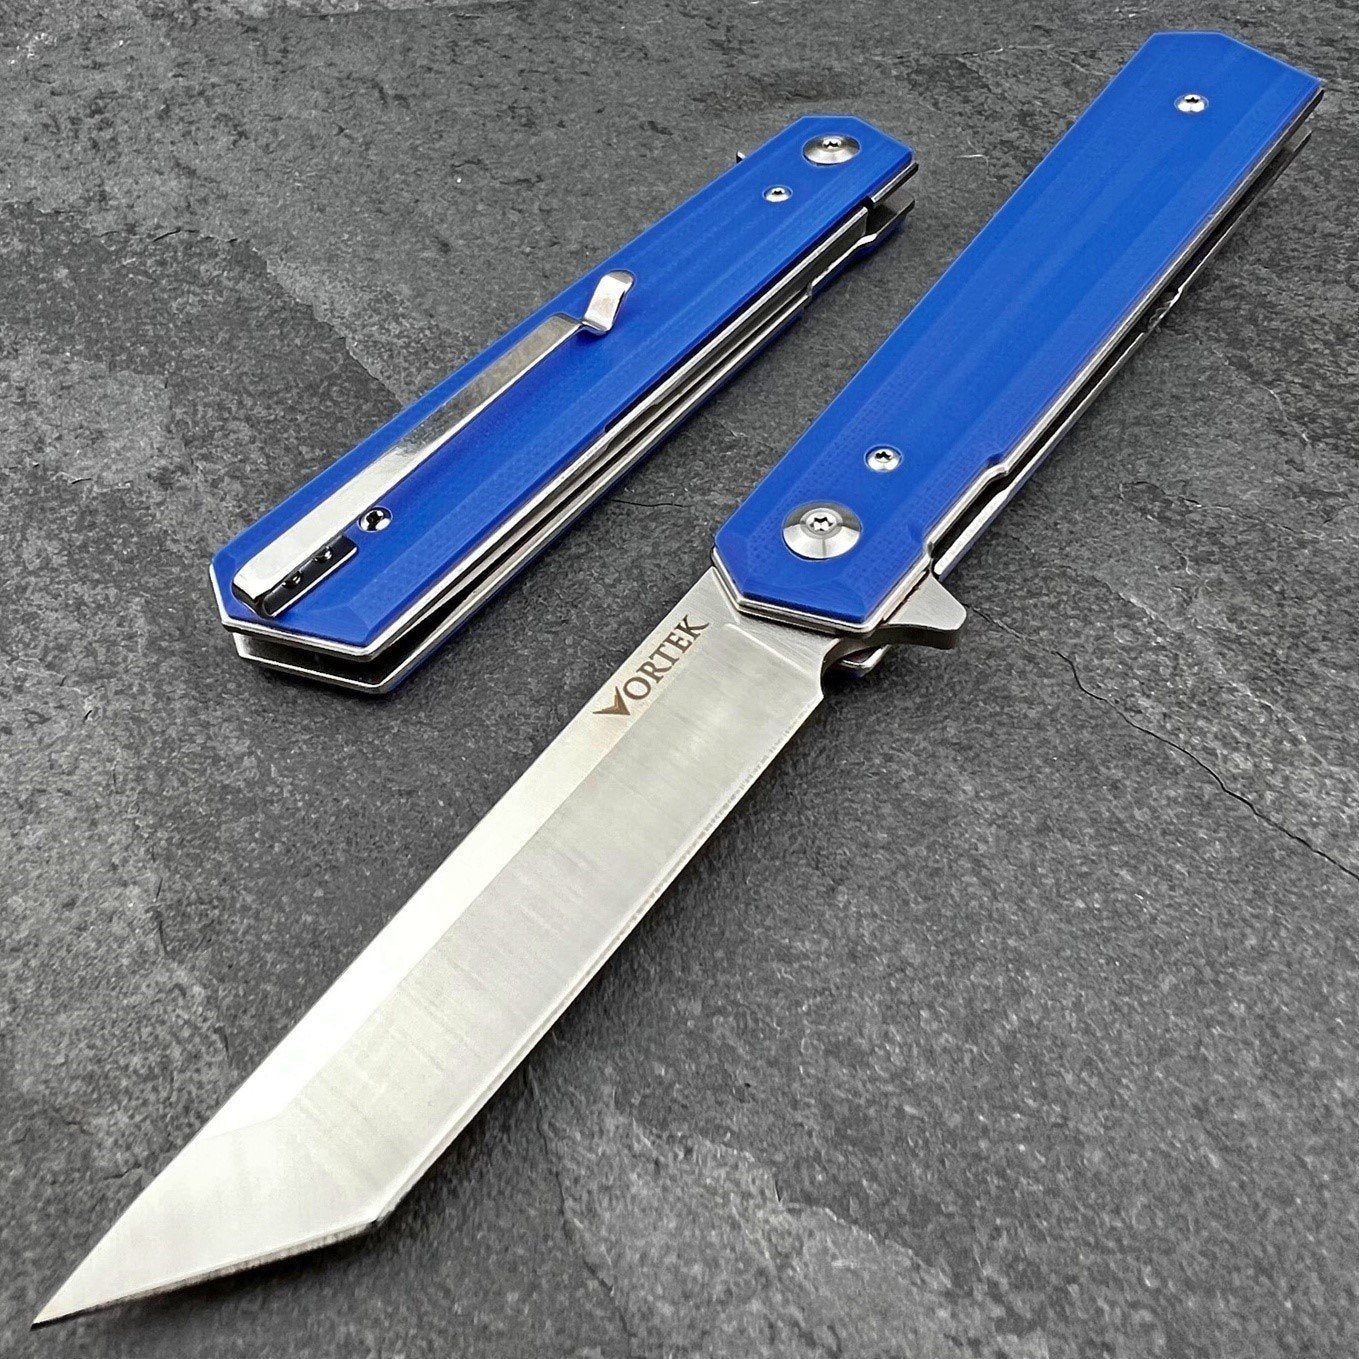 APACHE: Blue G10 Handles, 8Cr13MoV Tanto Blade